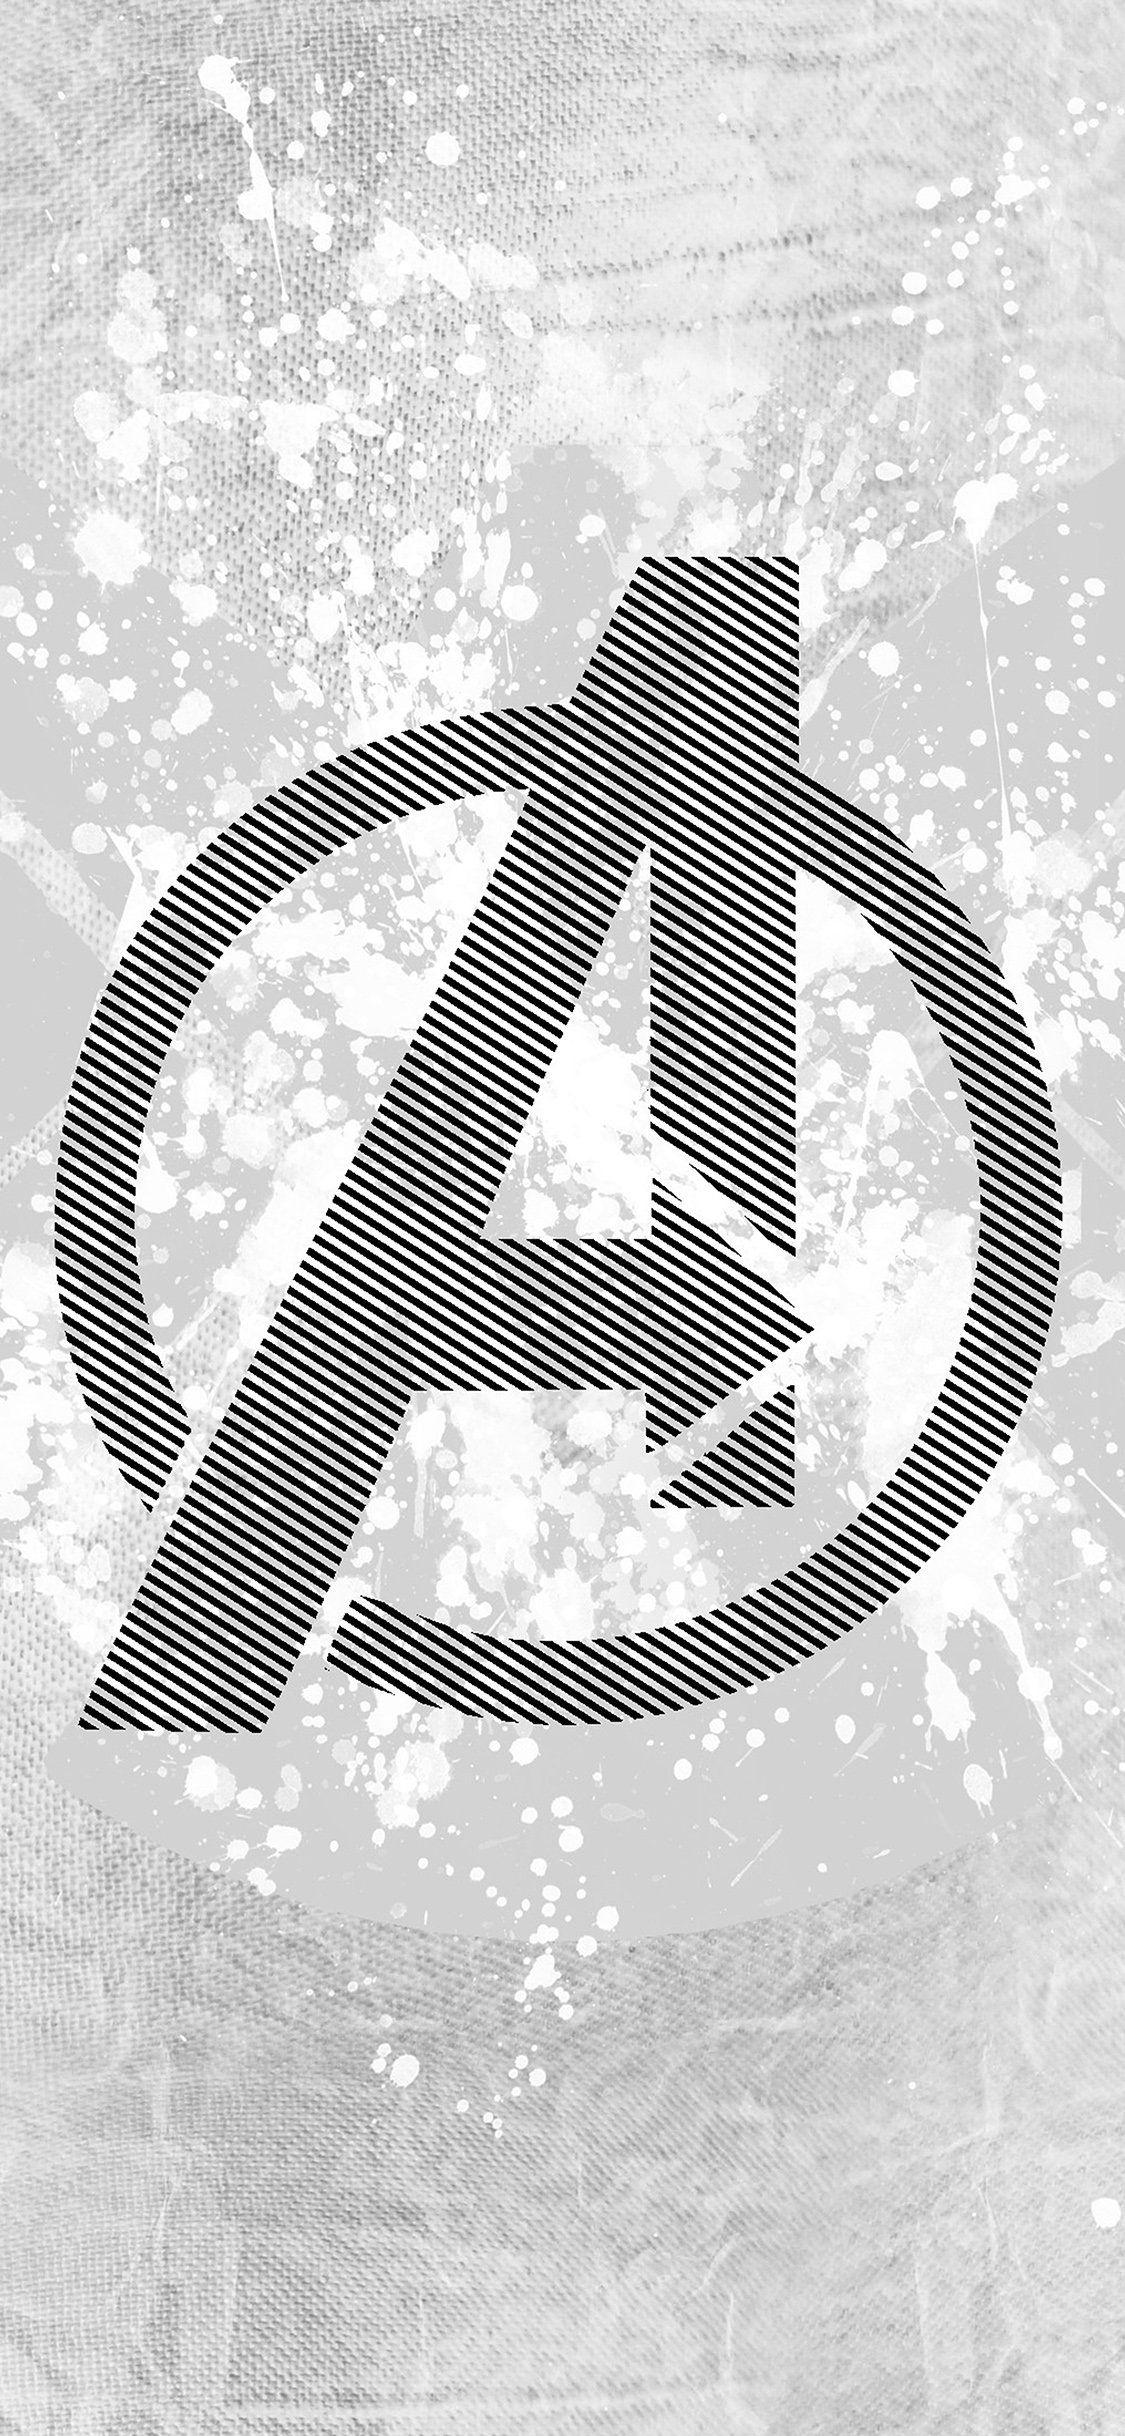 iPhone X wallpaper. avengers logo art hero